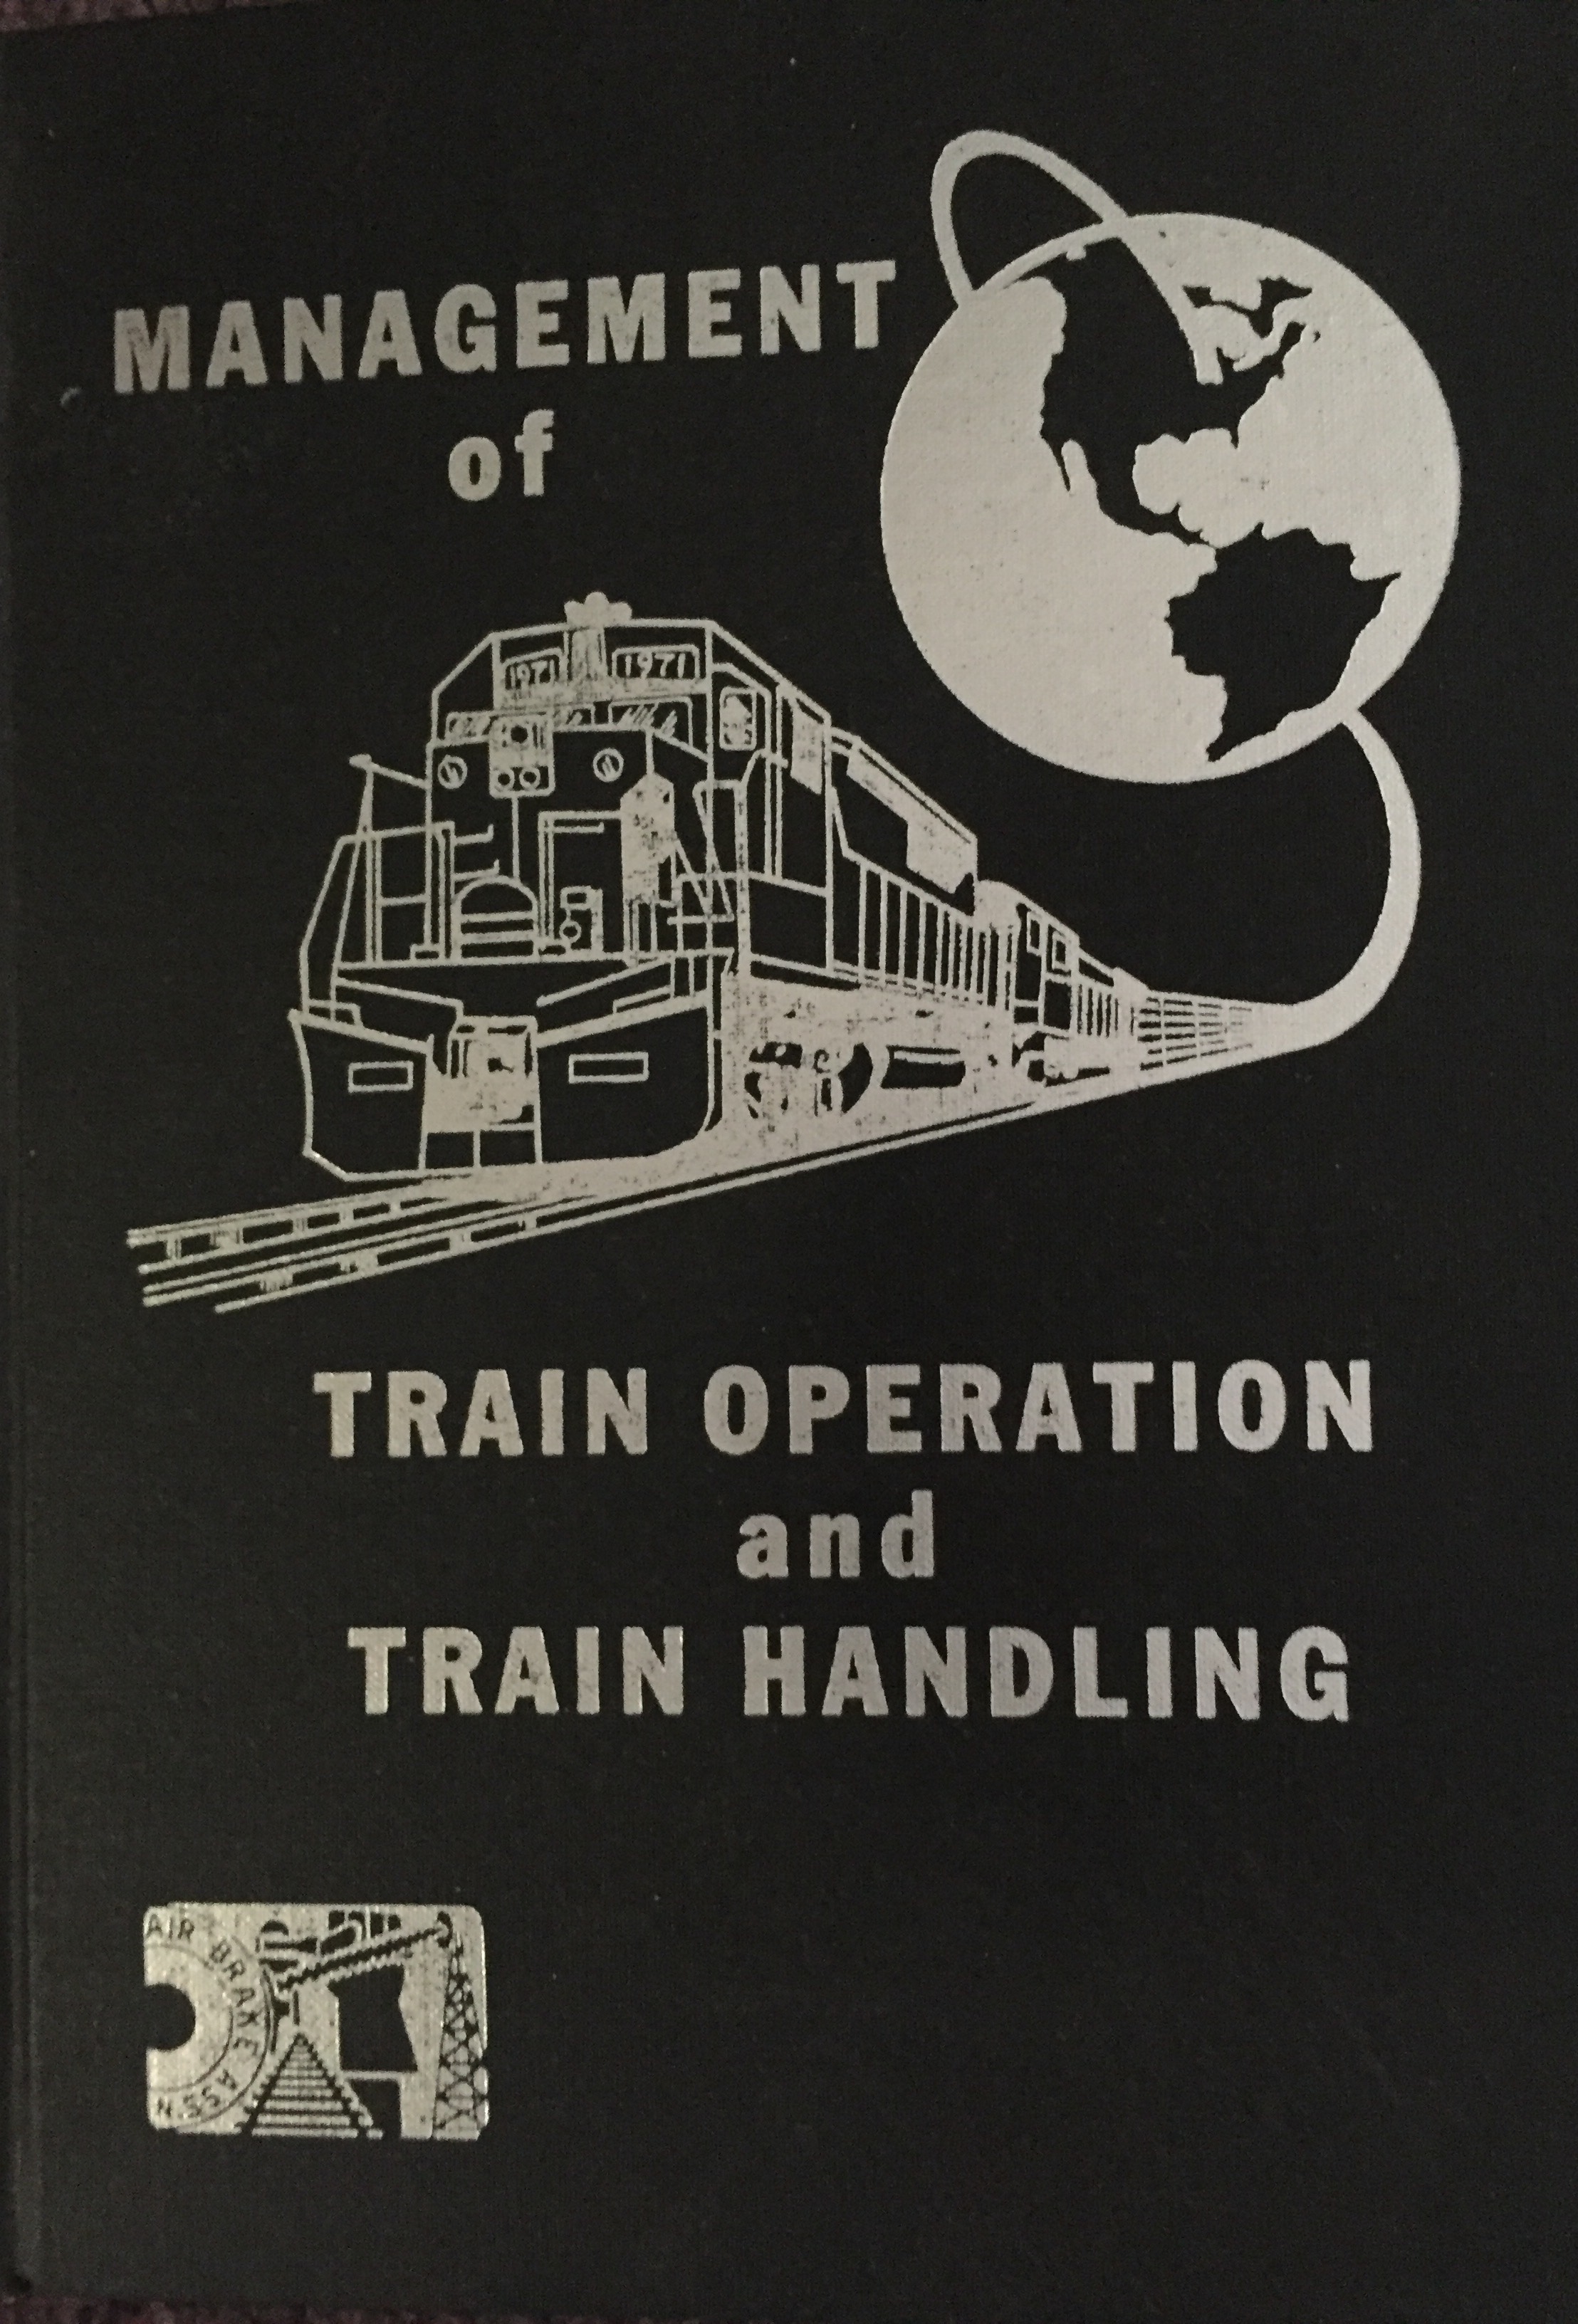 Book6 - managementof trainhandling